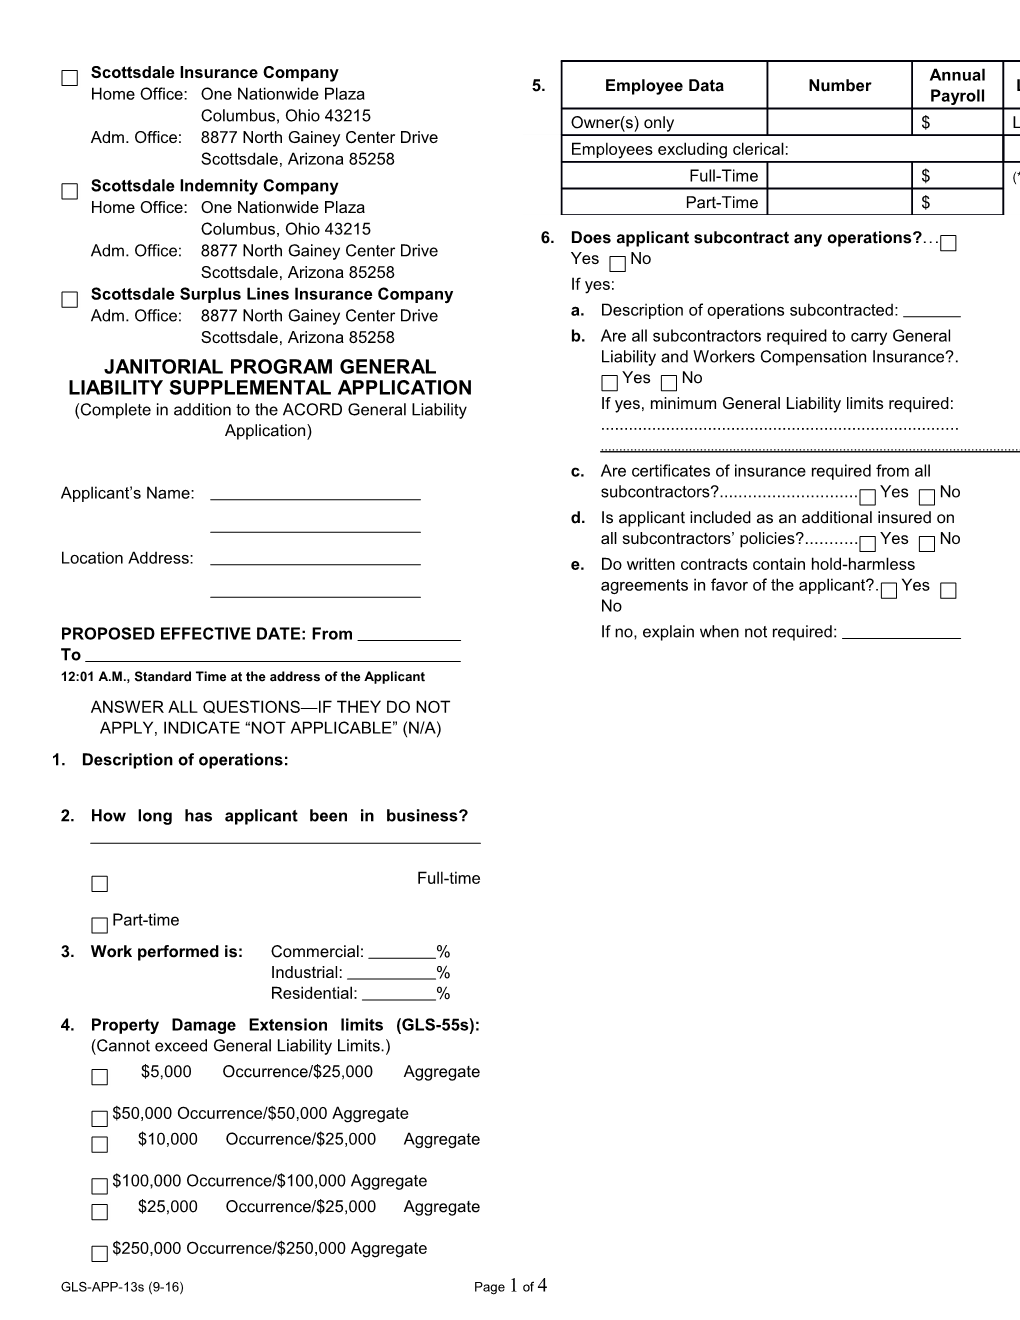 Janitorial Program General Liability Supplemental Application